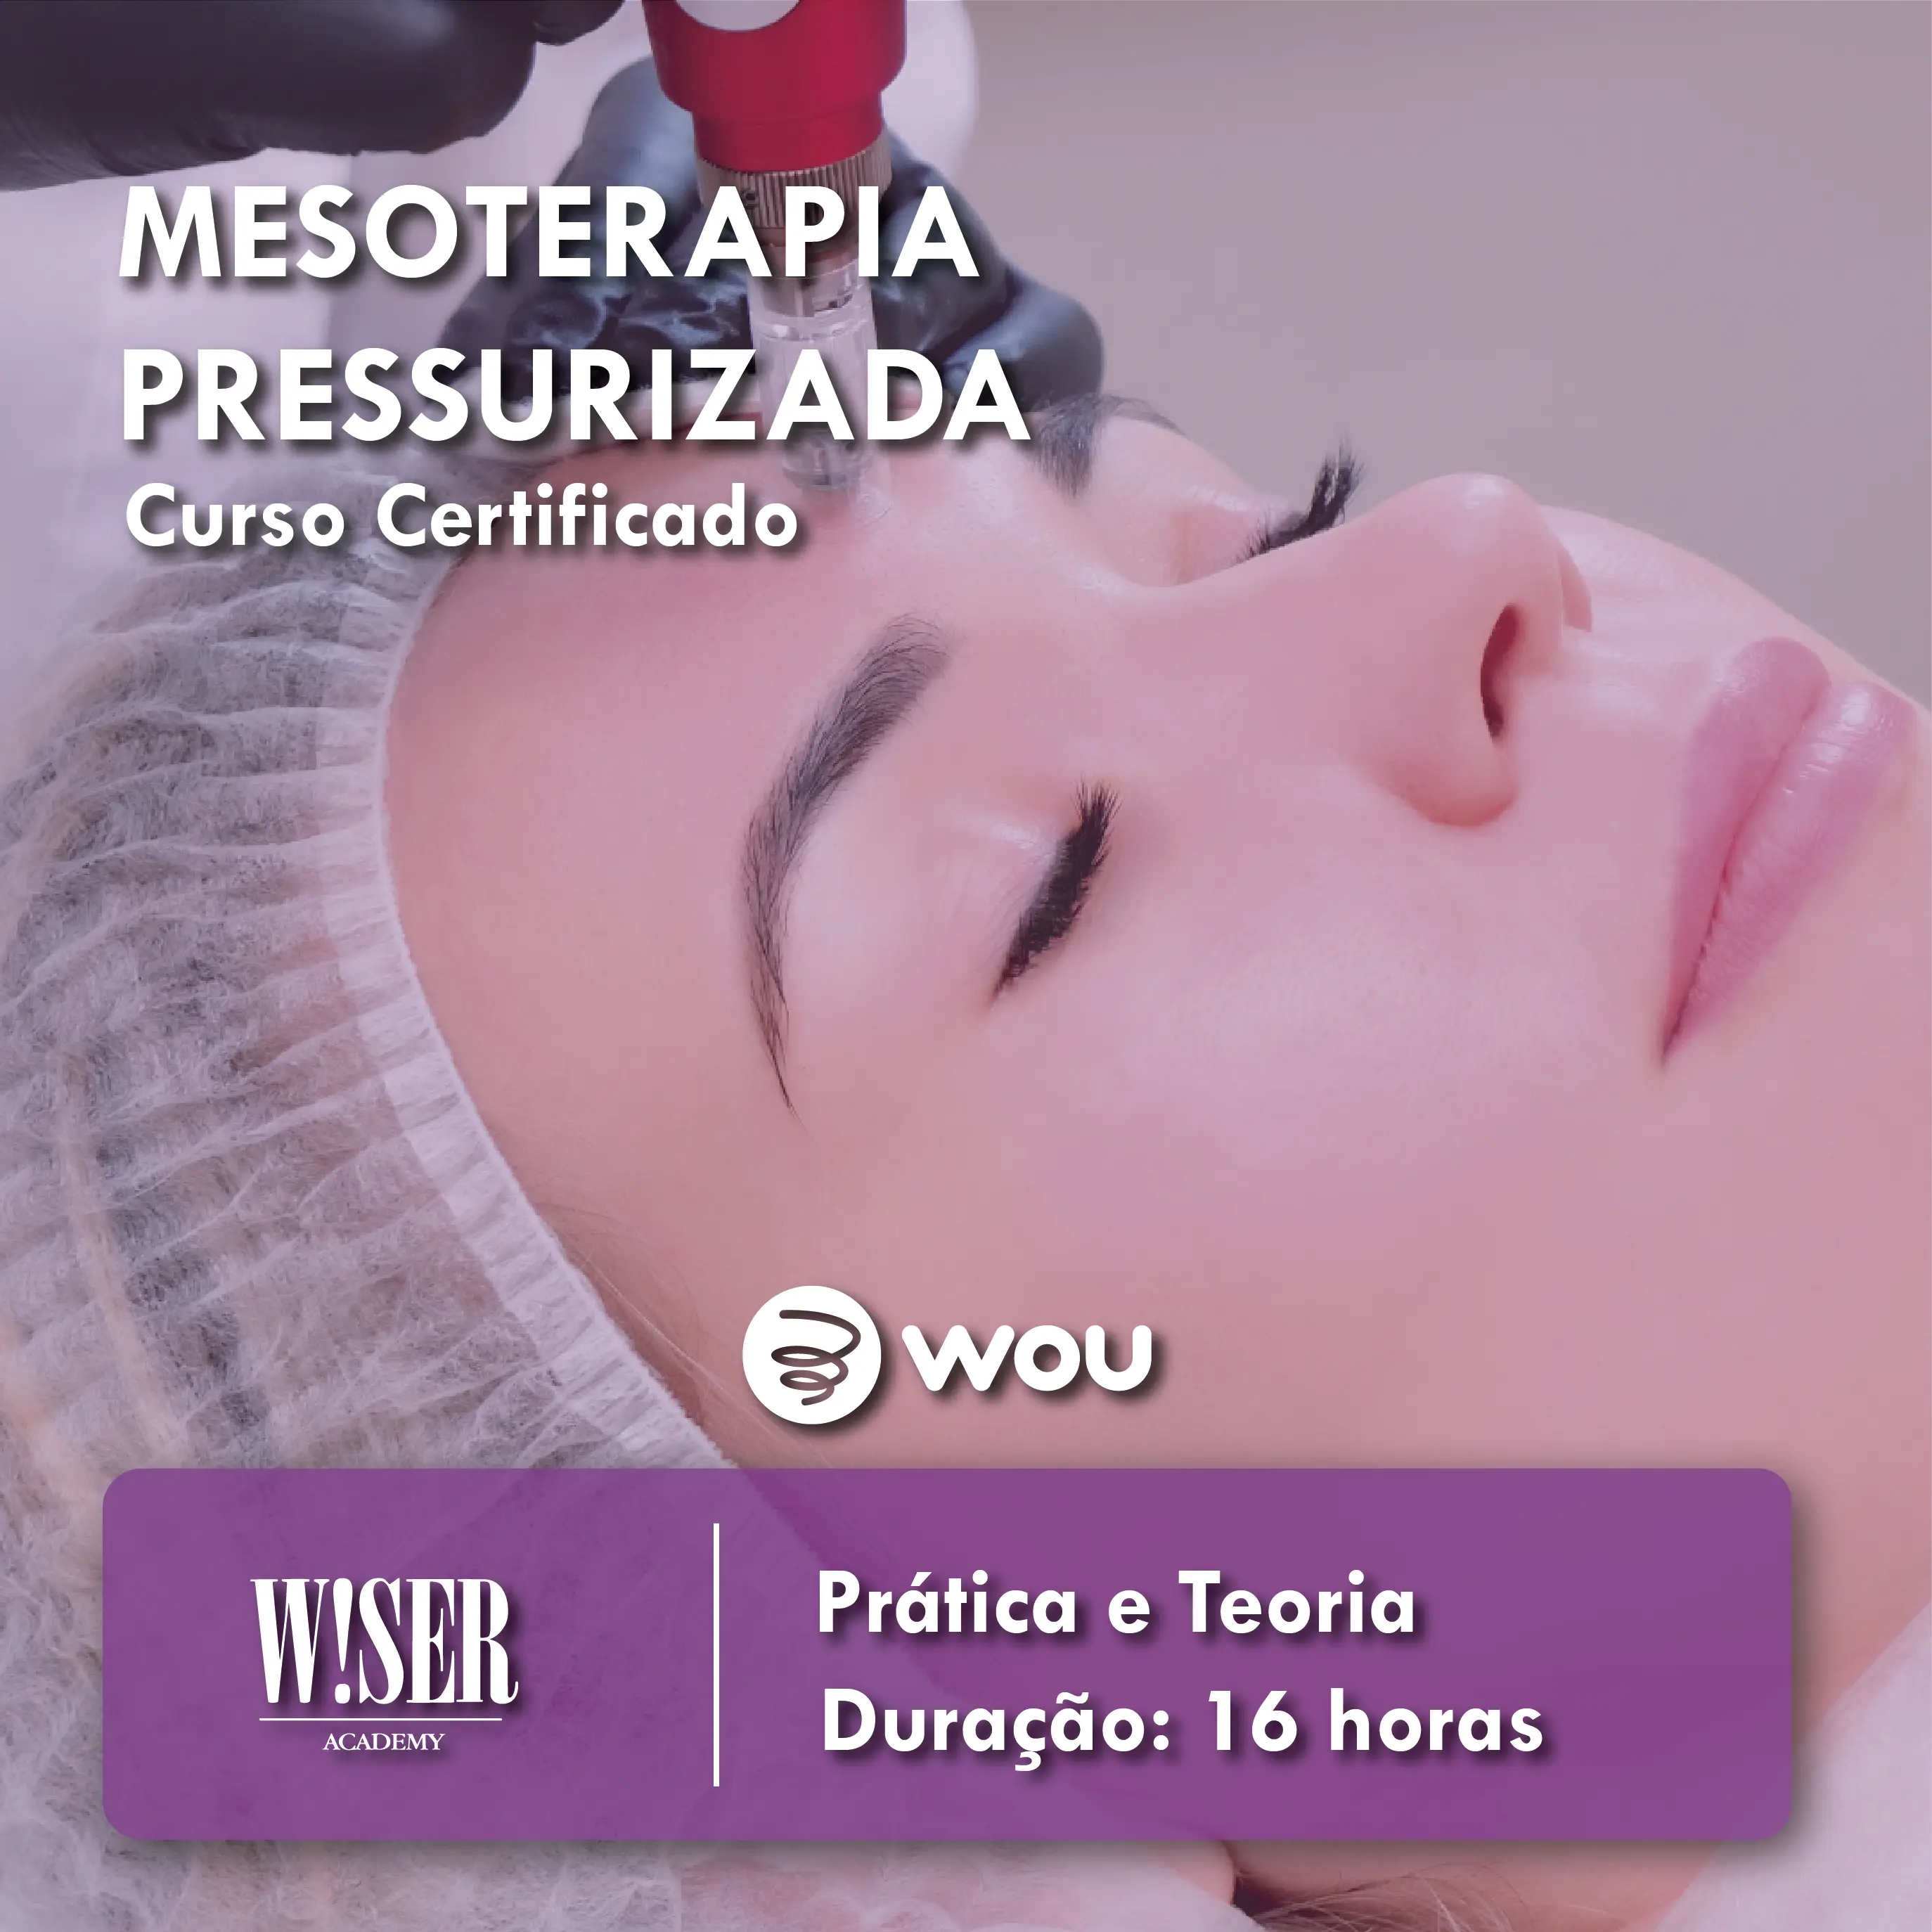 Curso de Mesoterapia Pressurizada em Coimbra